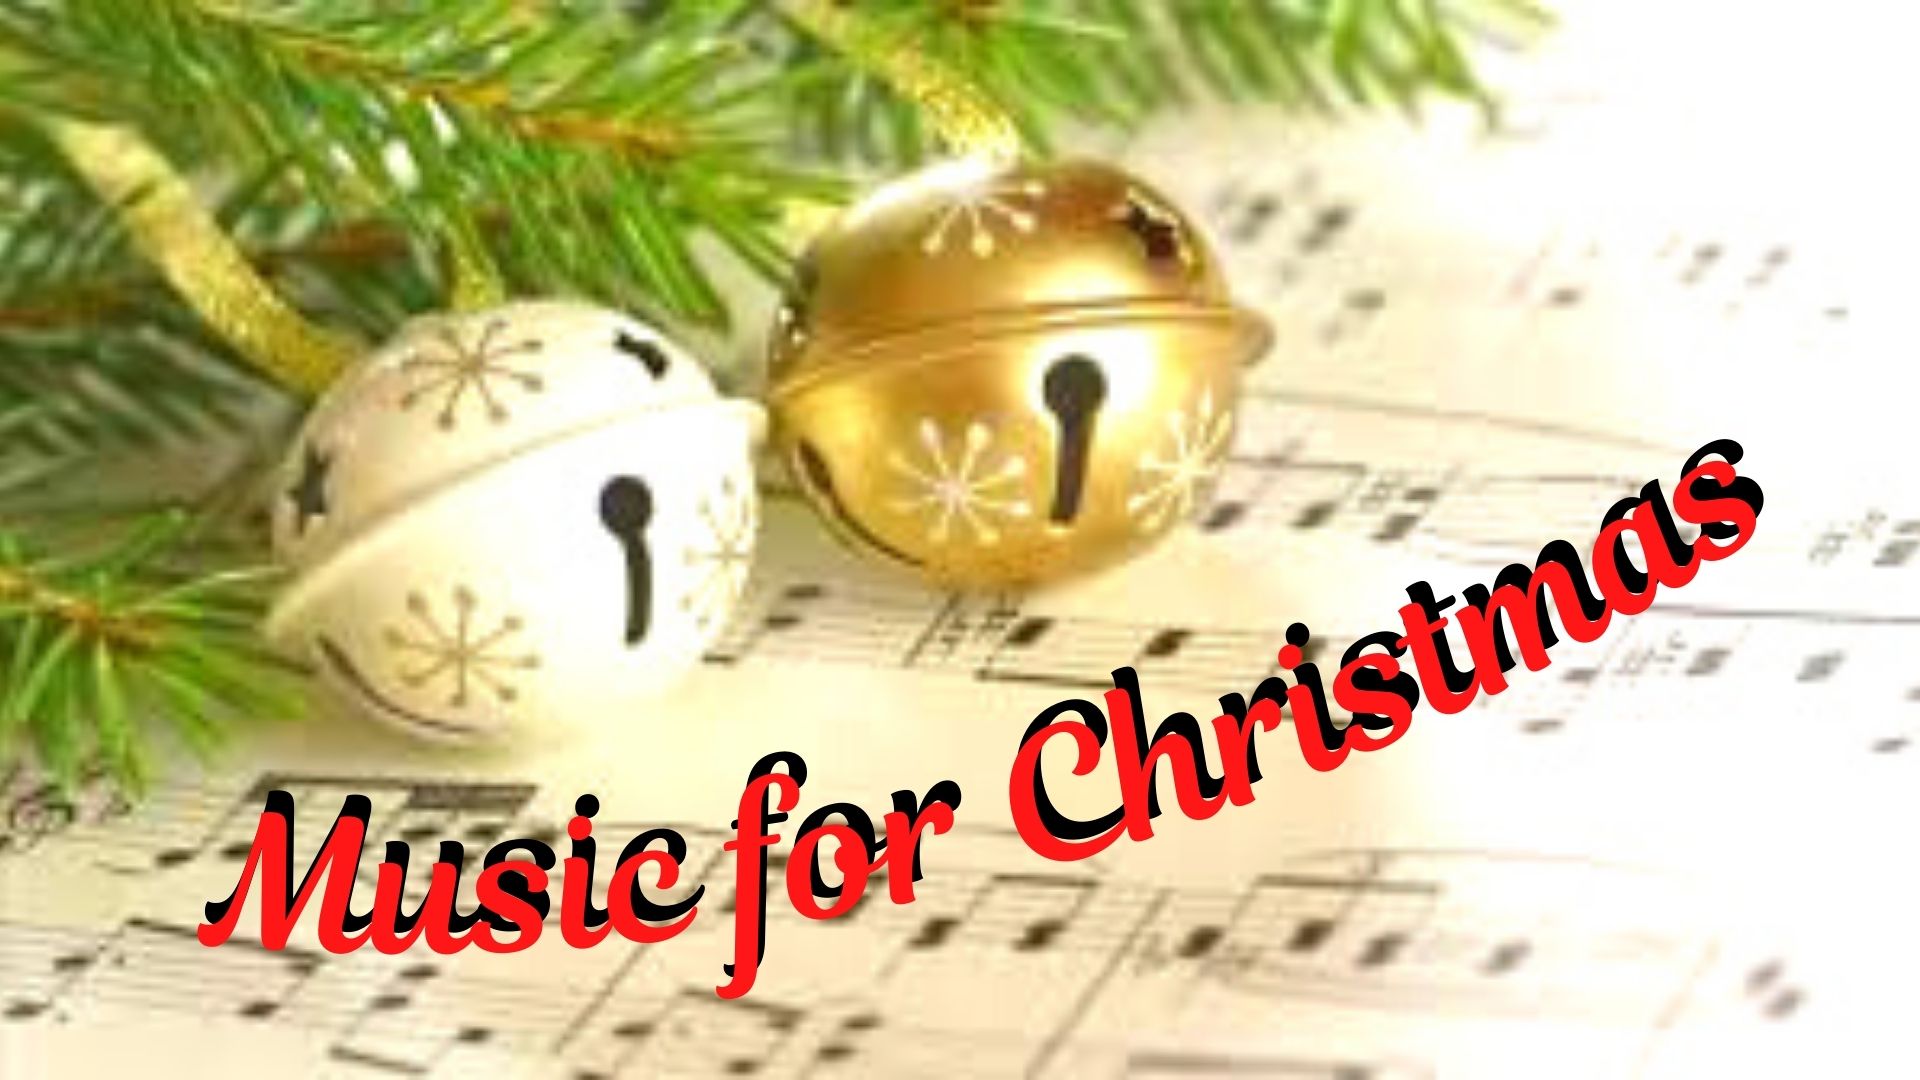 Новогодняя Музыка (Music for Christmas)